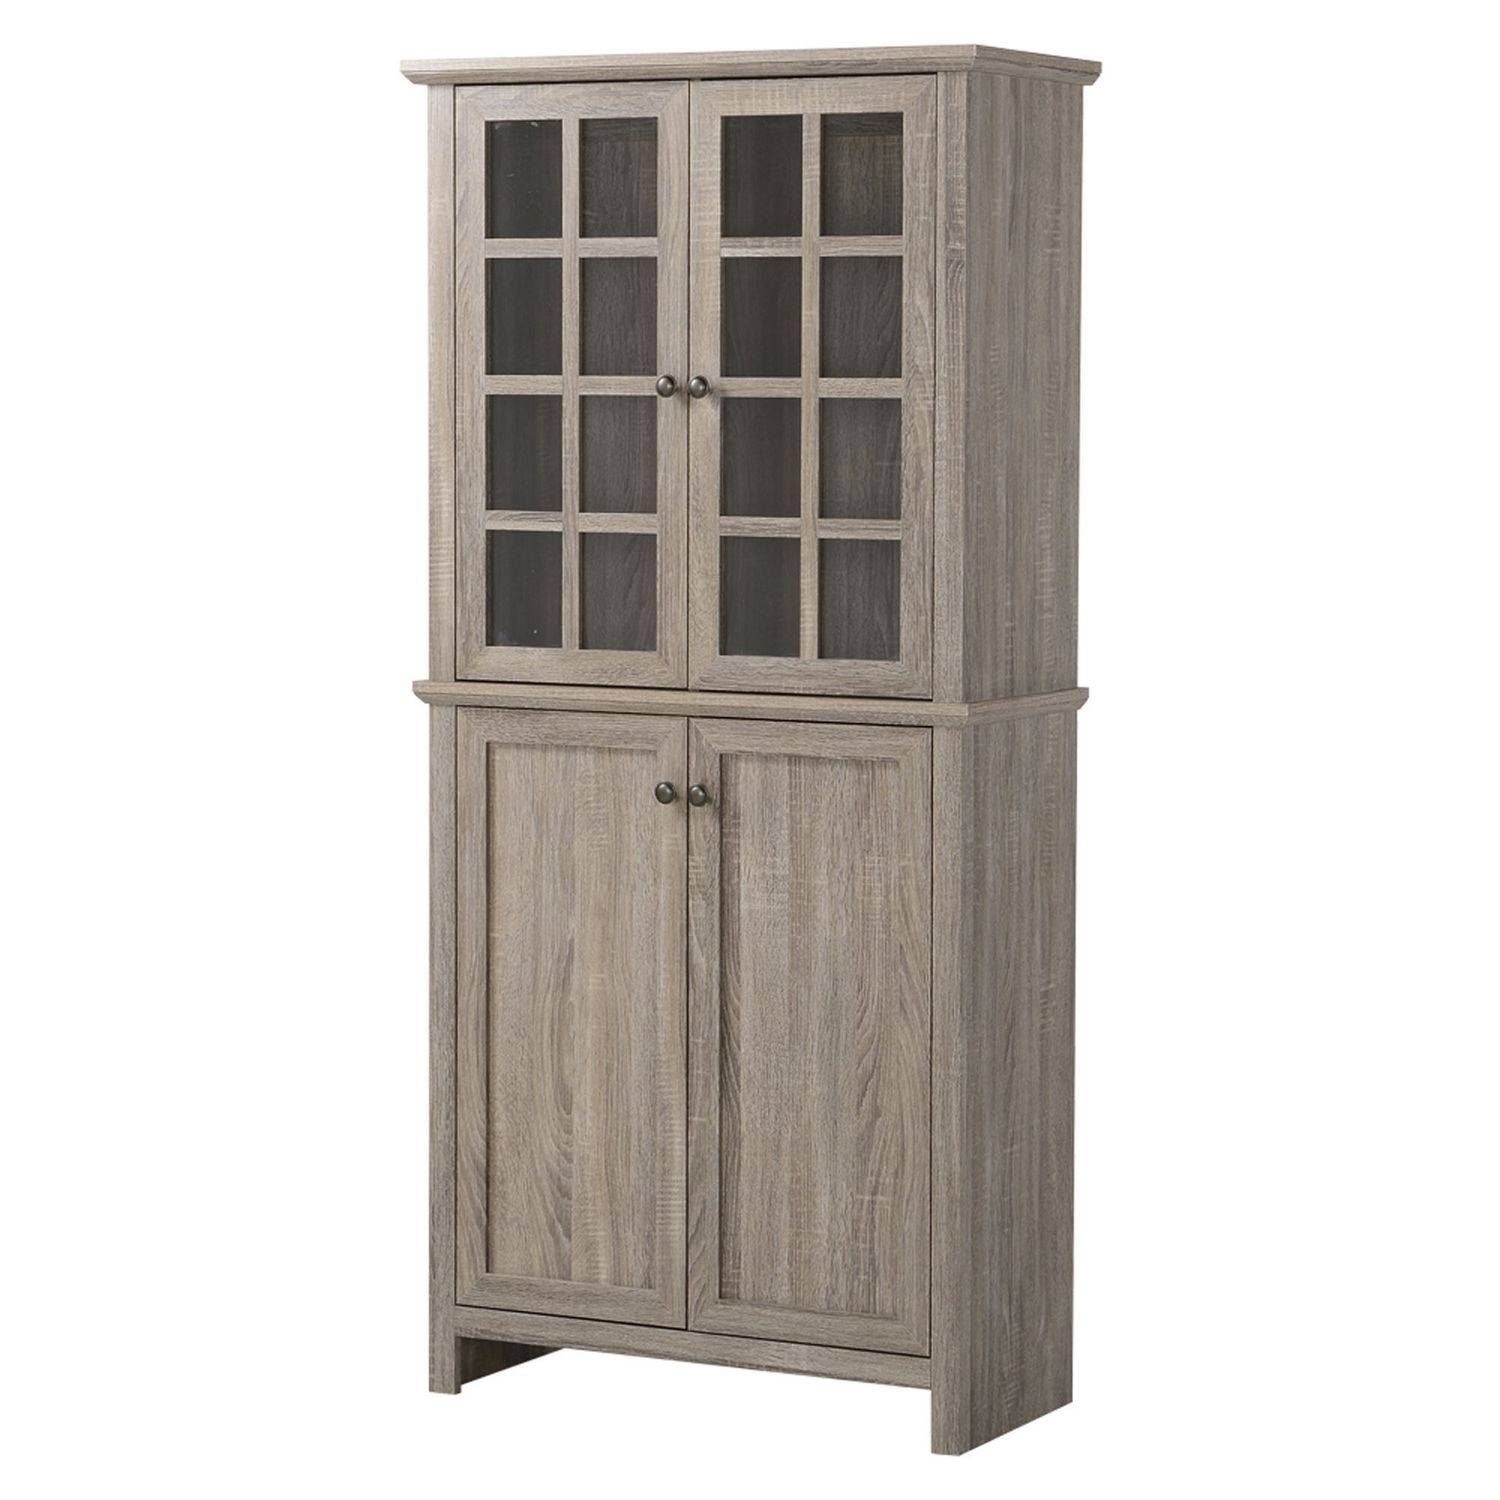 Kitchen : Kitchen Storage Units Credenzas And Sideboards Diy Regarding Amazon Furniture Sideboards (View 17 of 20)